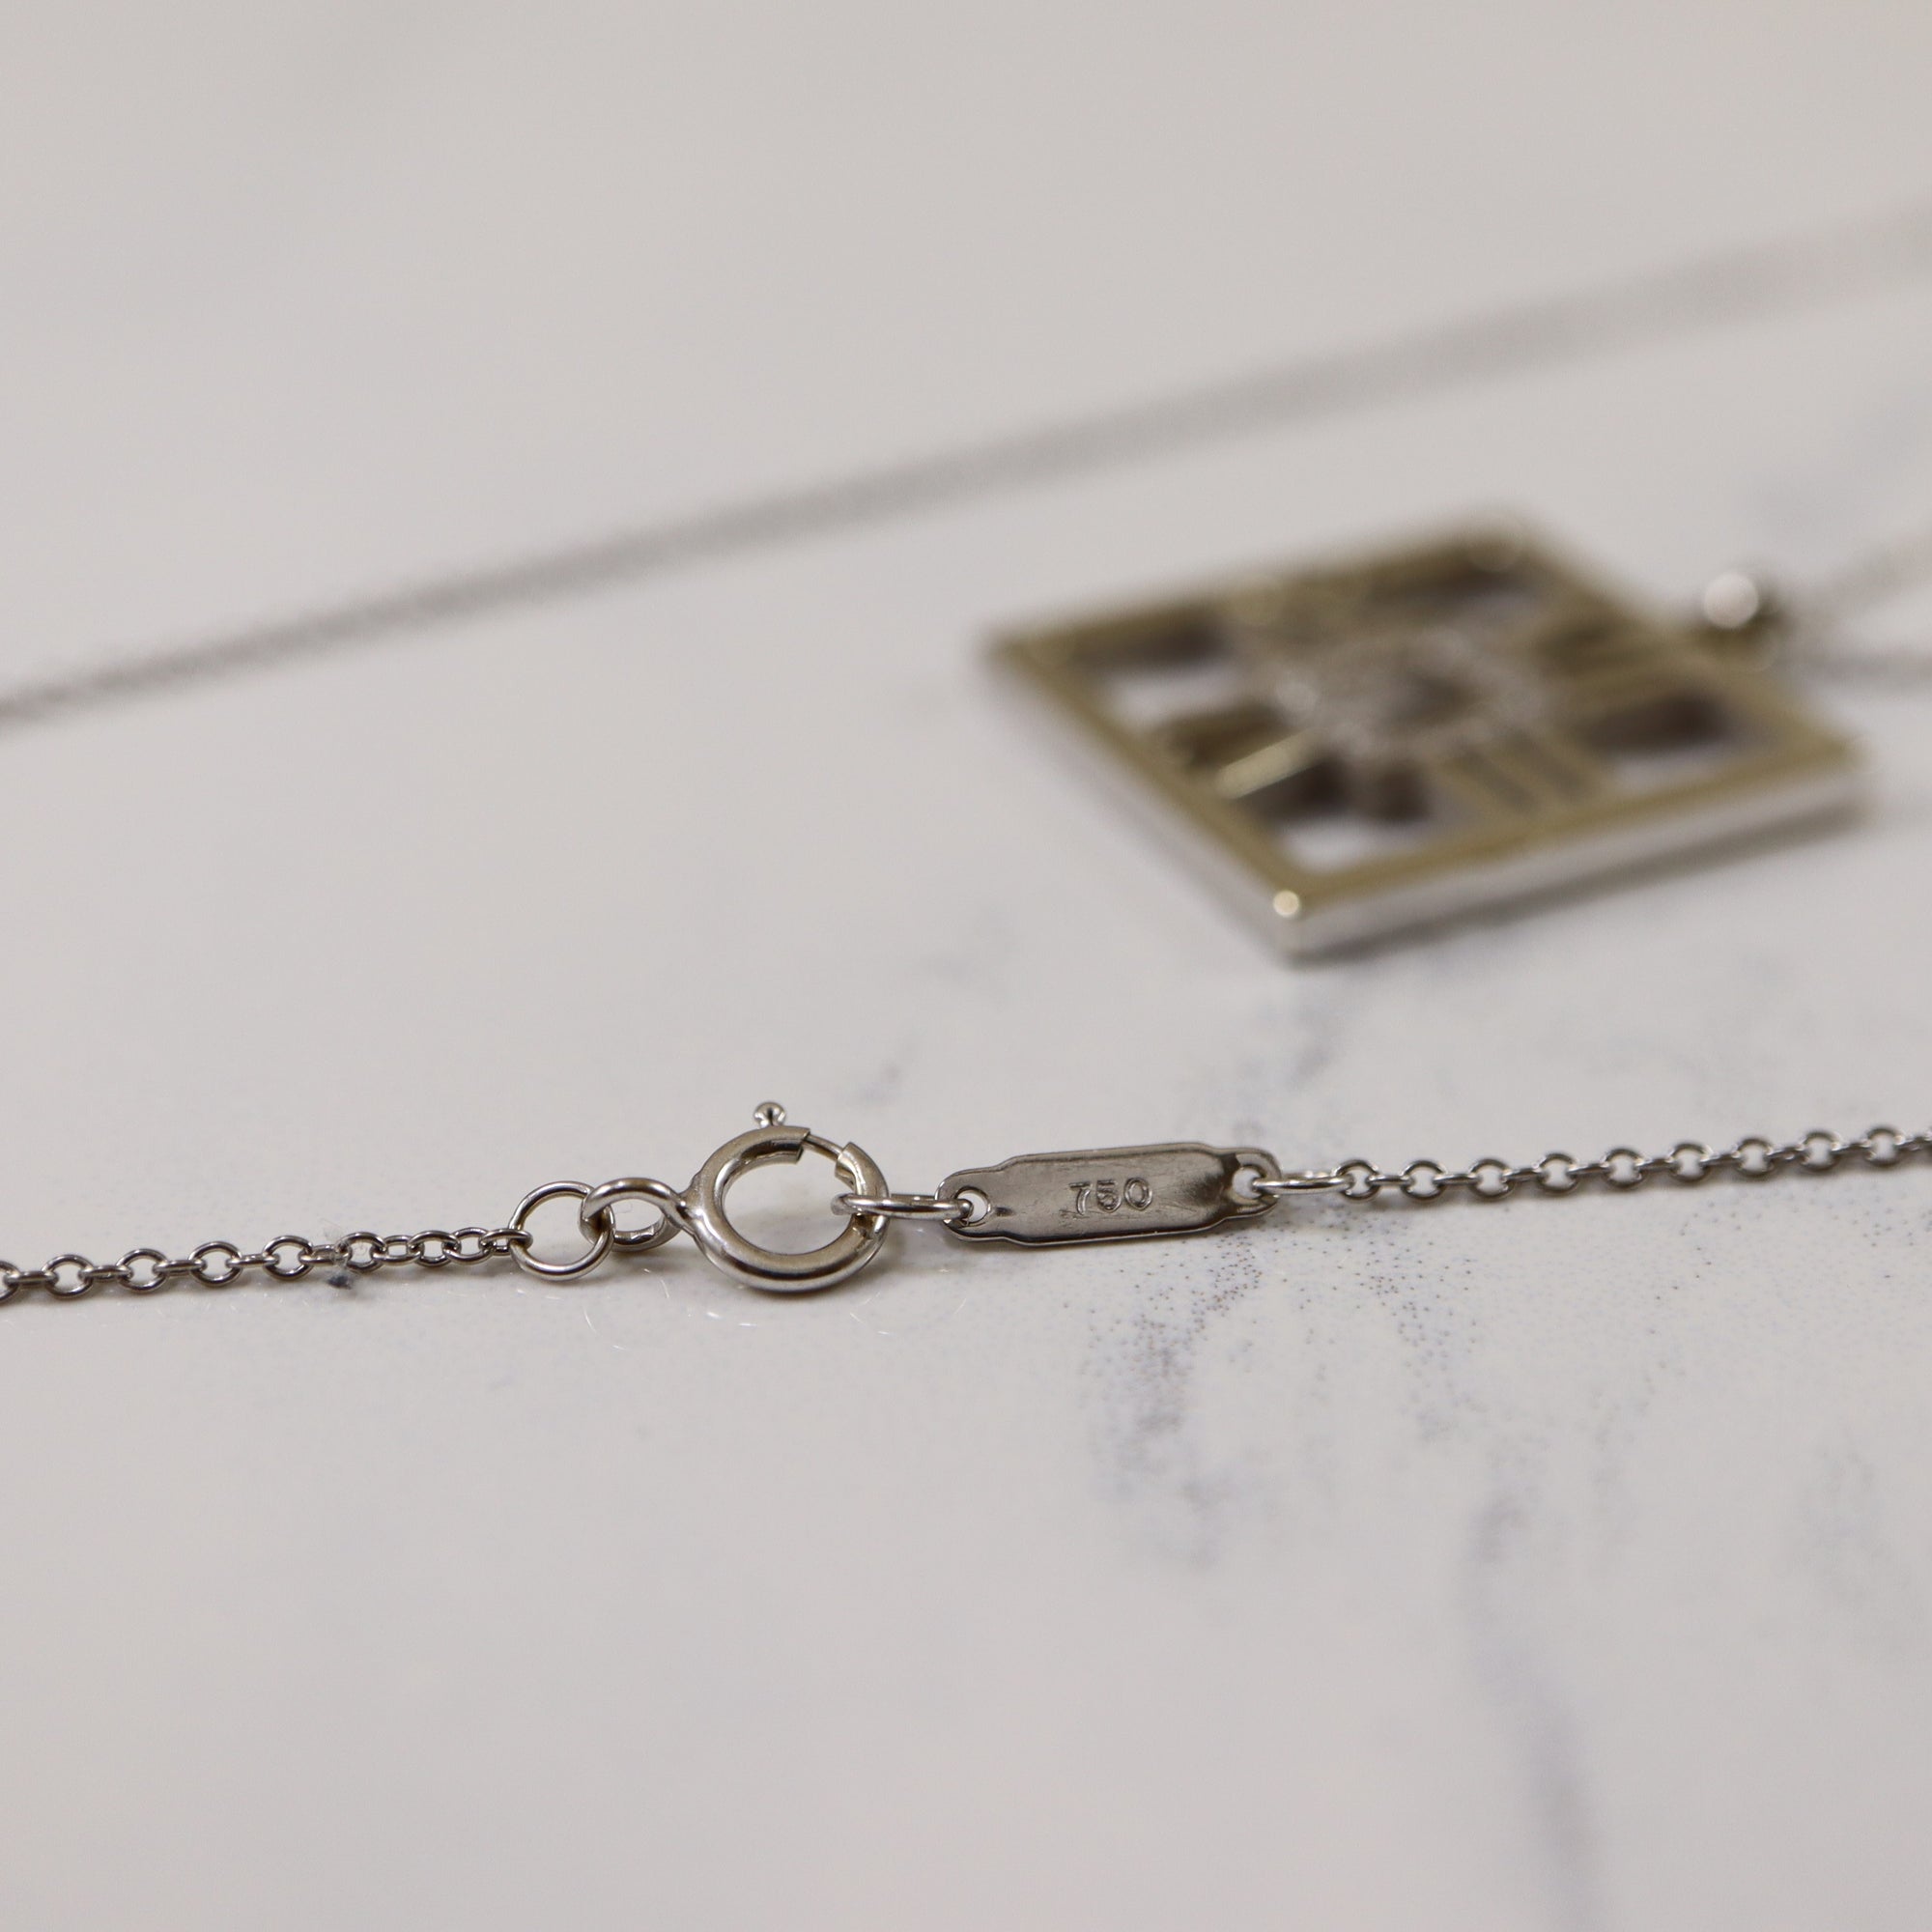 'Tiffany & Co.' Square Atlas Necklace | 0.16ctw | 24